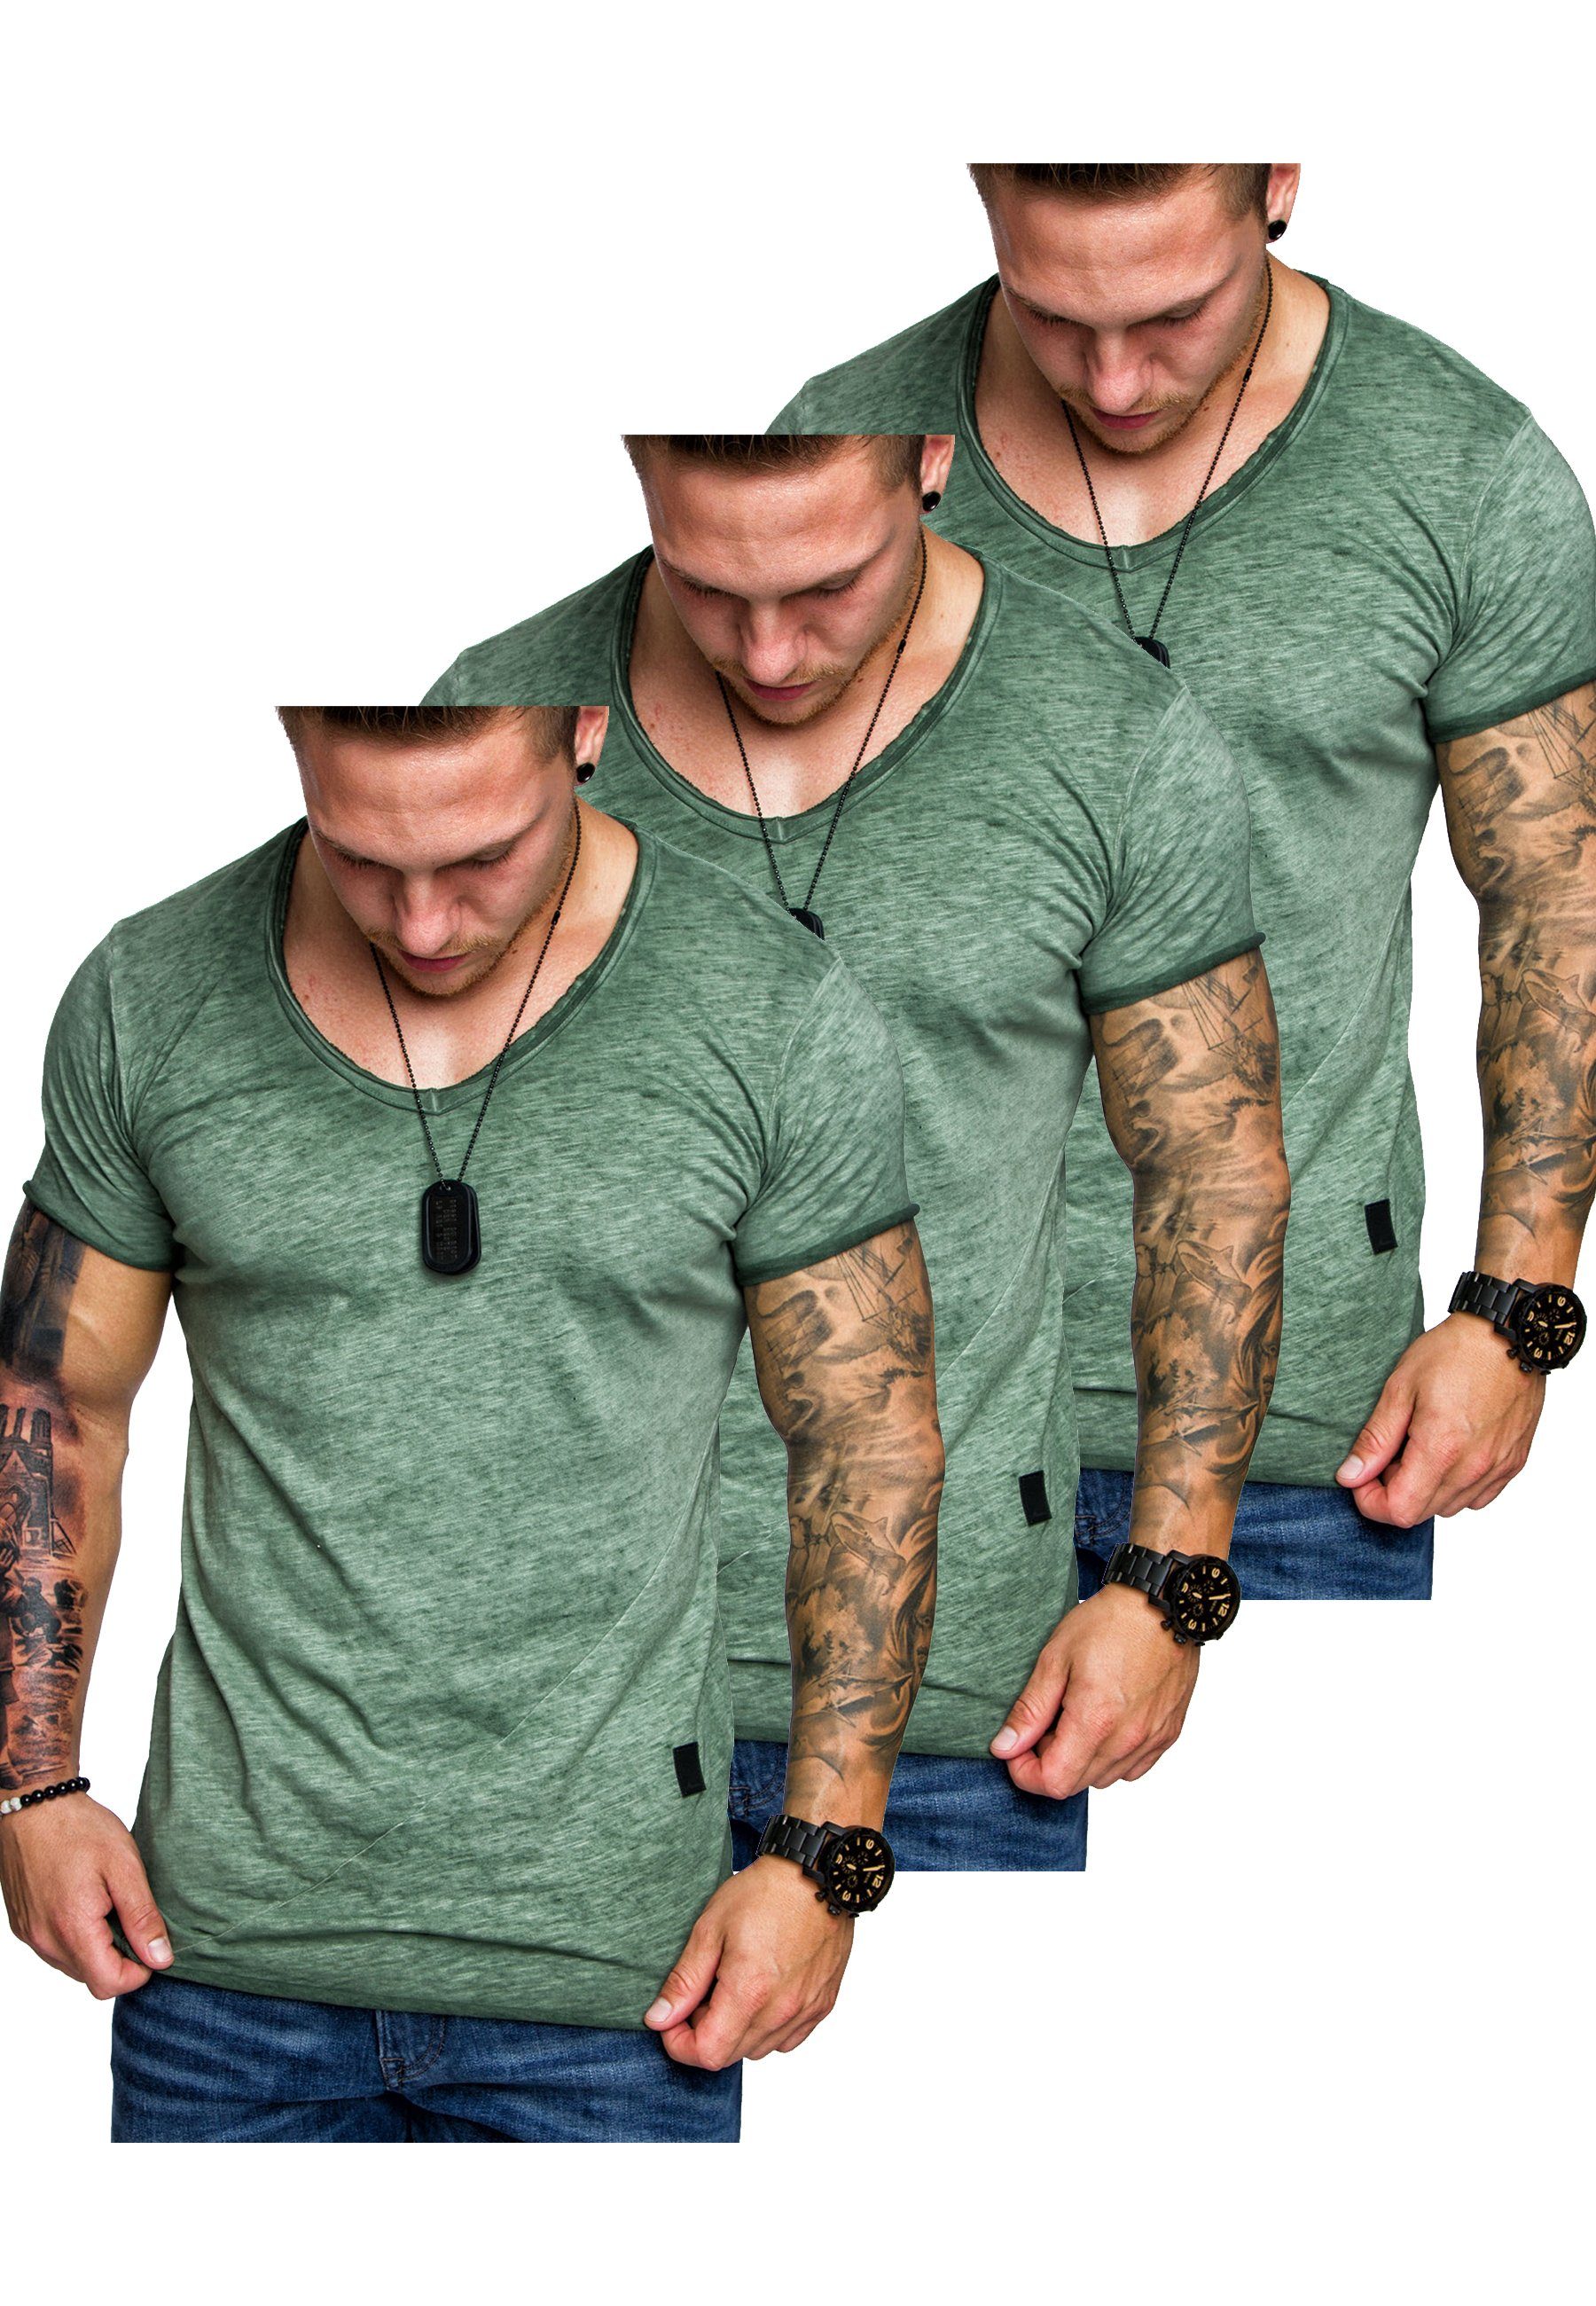 Amaci&Sons T-Shirt 3. Herren (3x NYC T-Shirts Khaki) (3er-Pack) Herren 3er-Pack V-Ausschnitt Oversize mit Basic T-Shirt